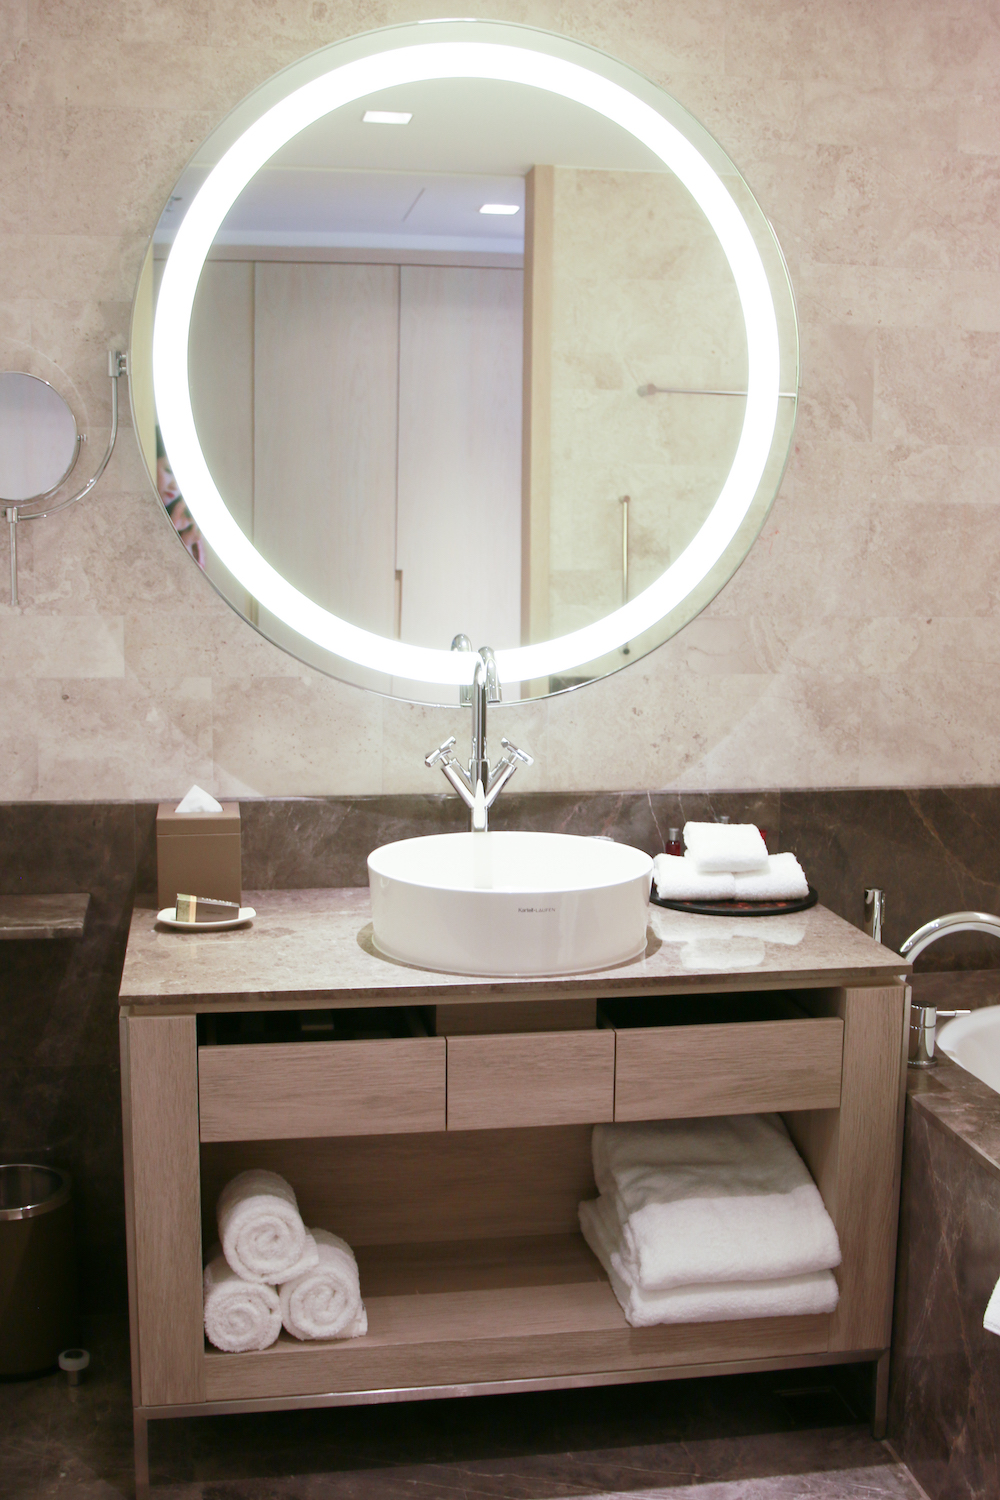 taipei-marriott-hotel-bathroom-review-interior